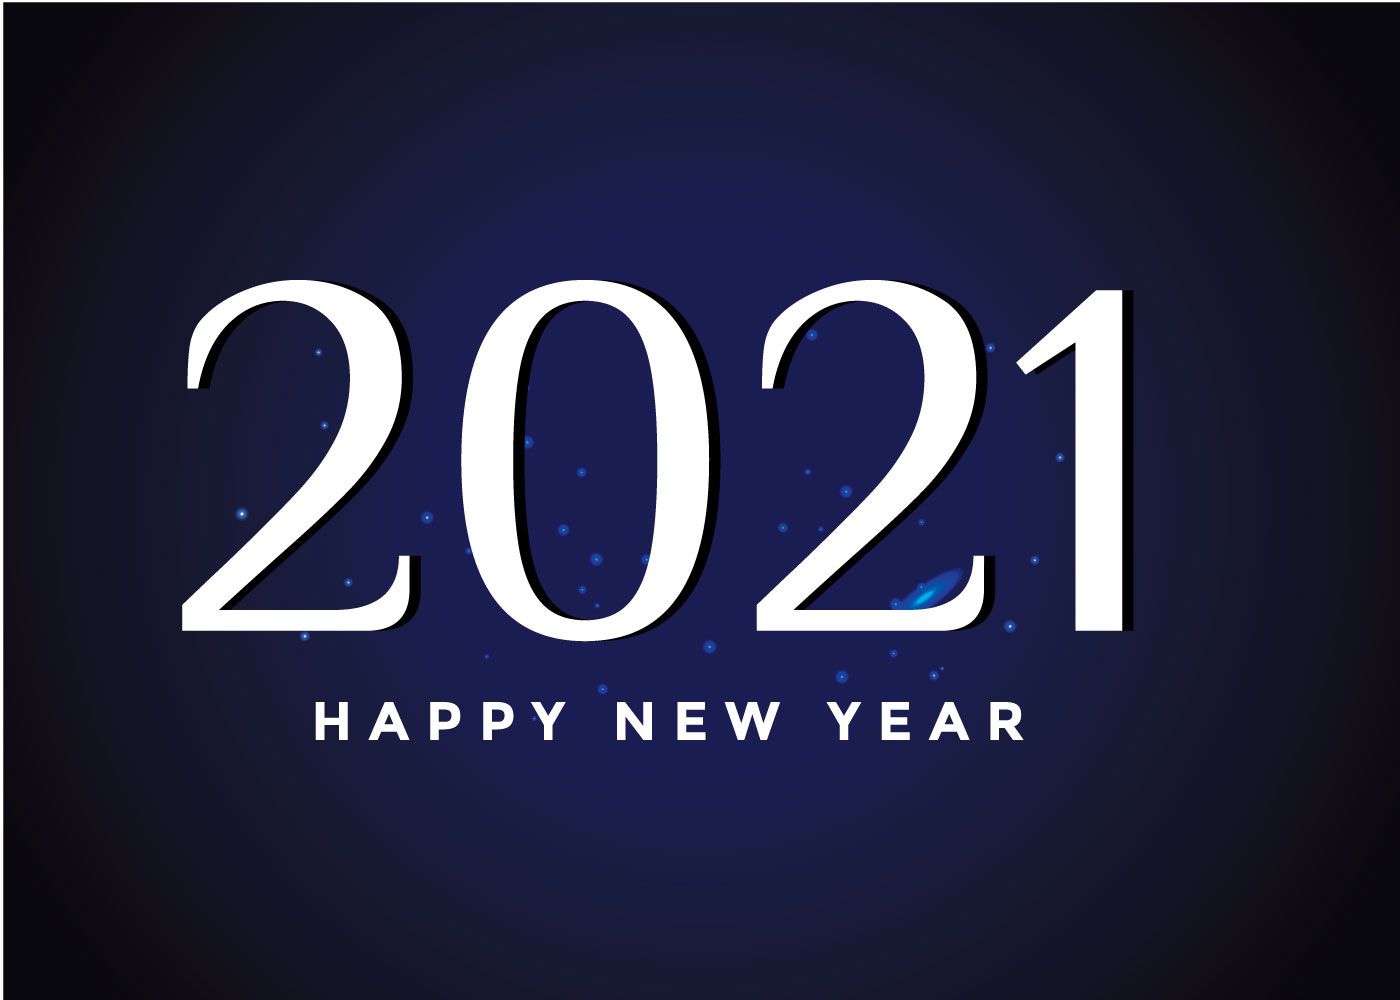 Stunning Happy New Year 2021 Image. Happy new year image, Happy new year wishes, Happy new year wallpaper